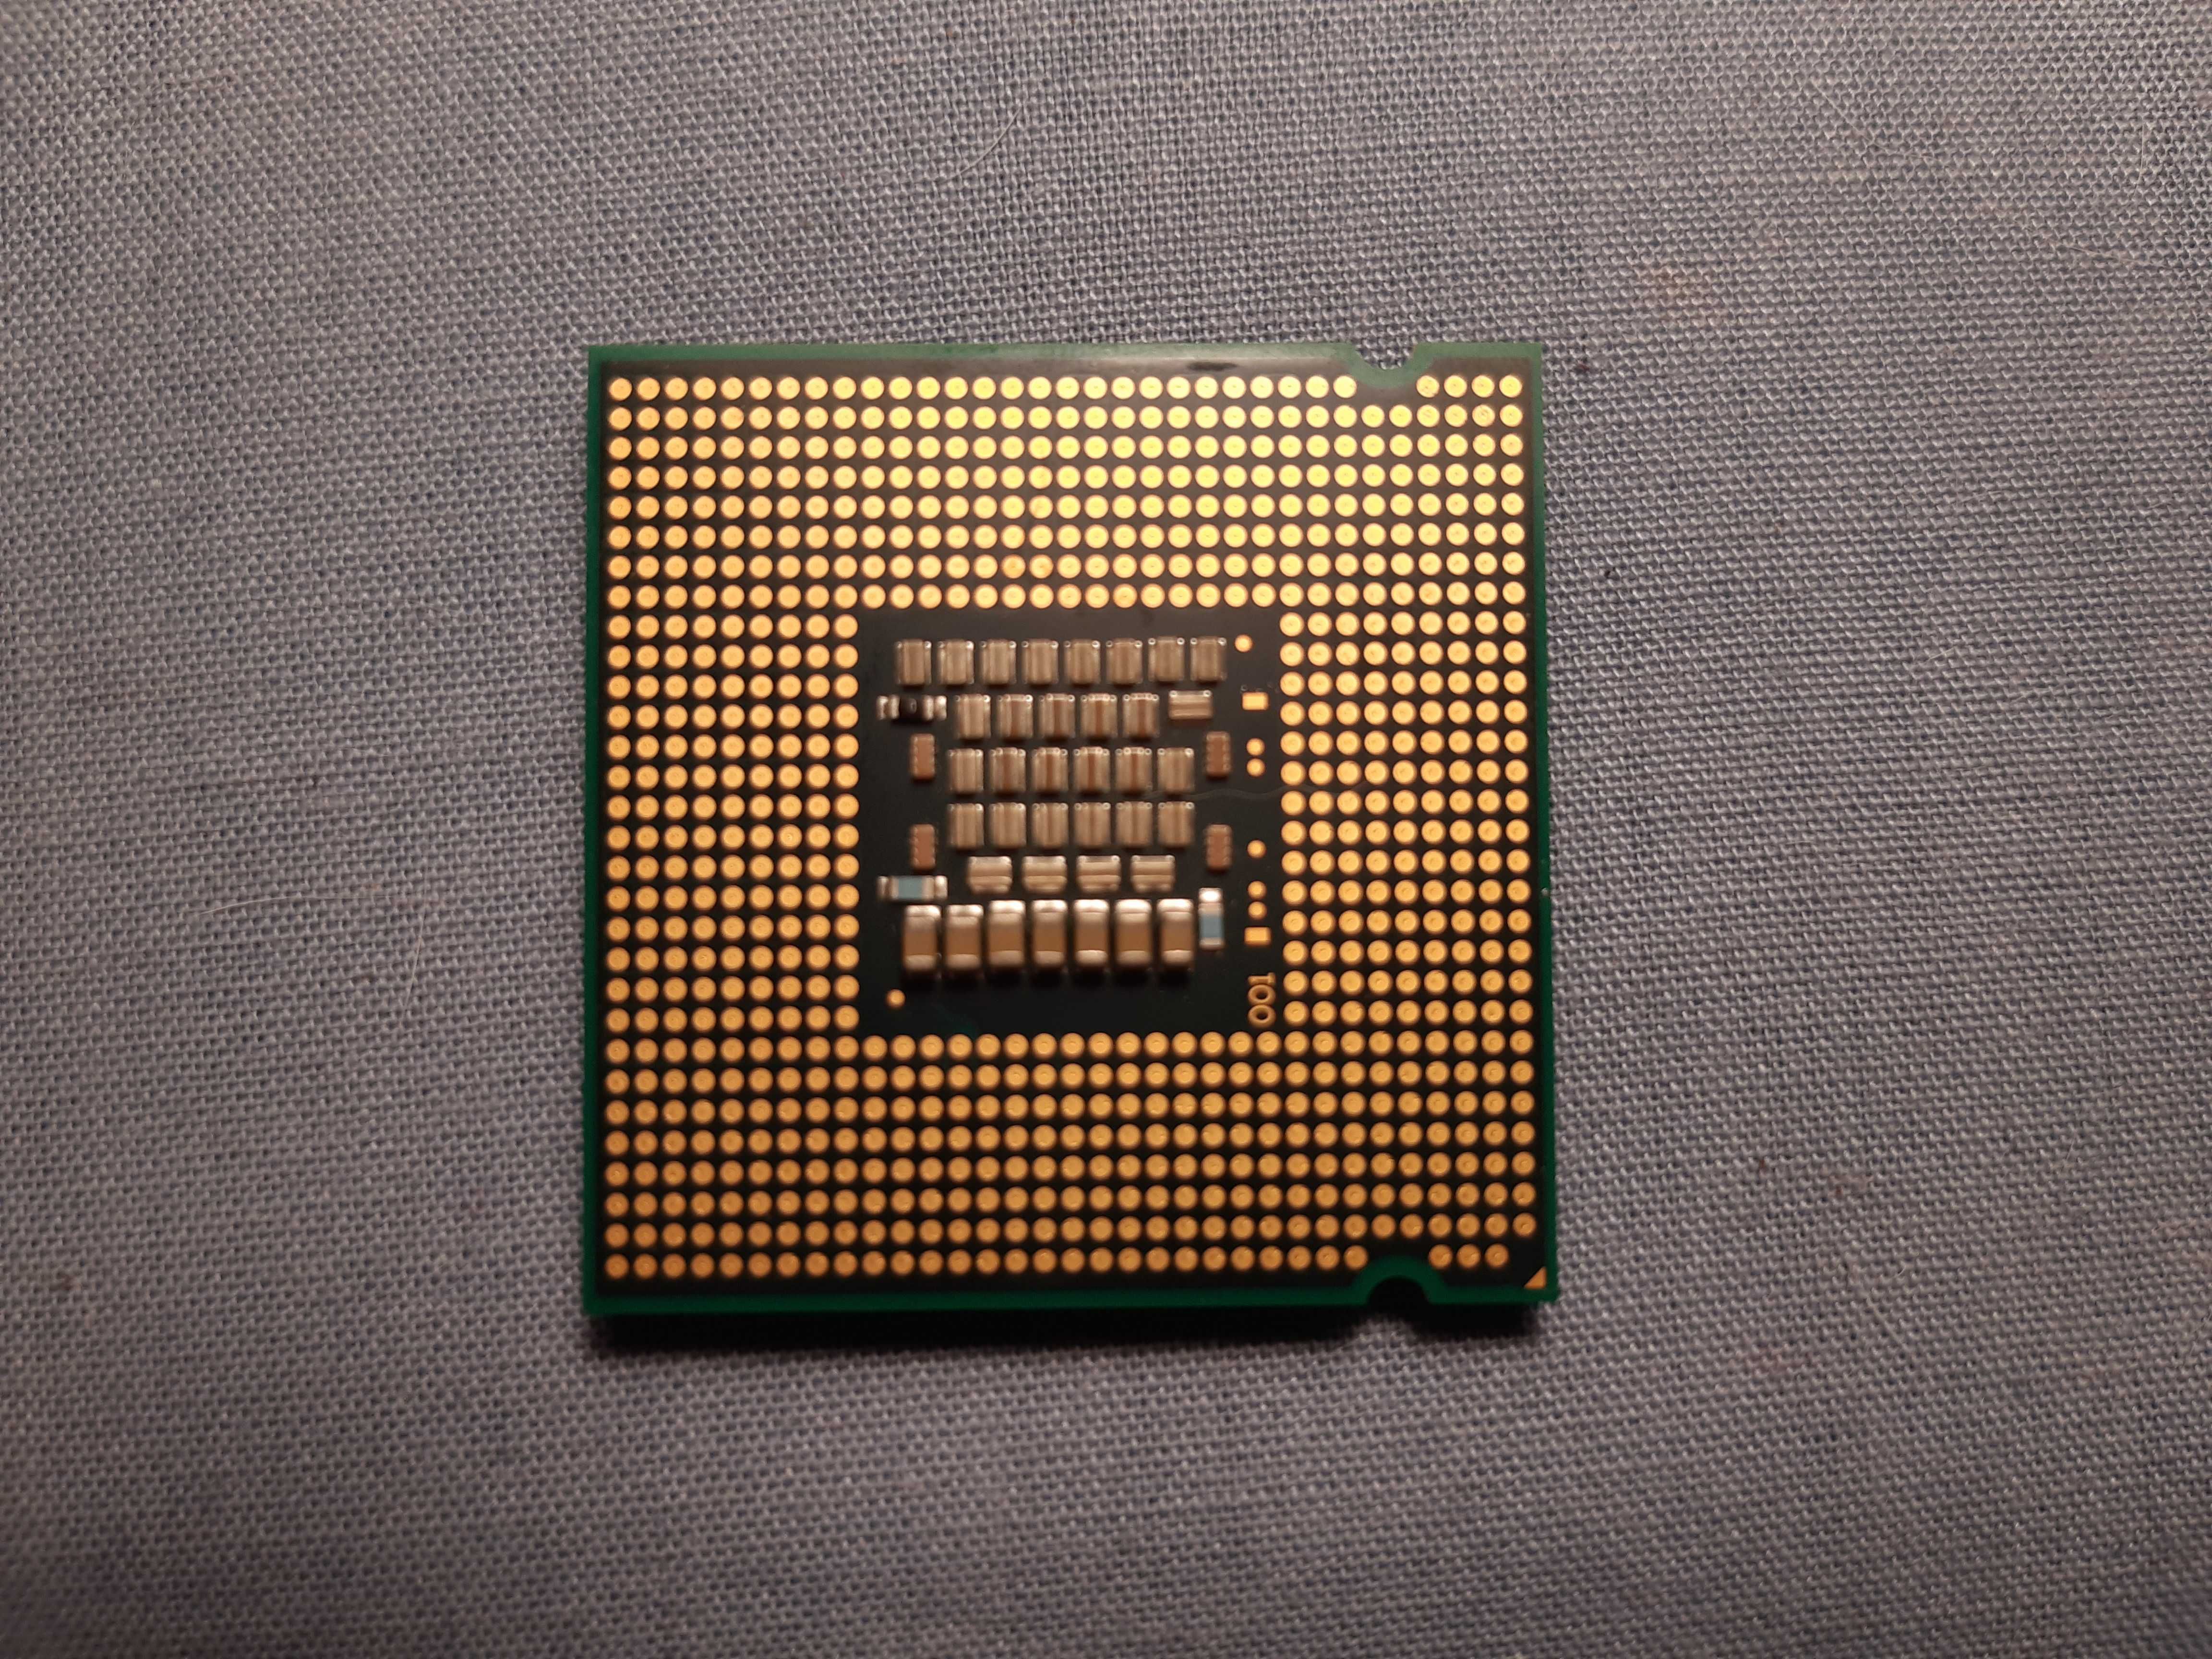 Intel Core2Duo E6300 LGA 775, 100% sprawny